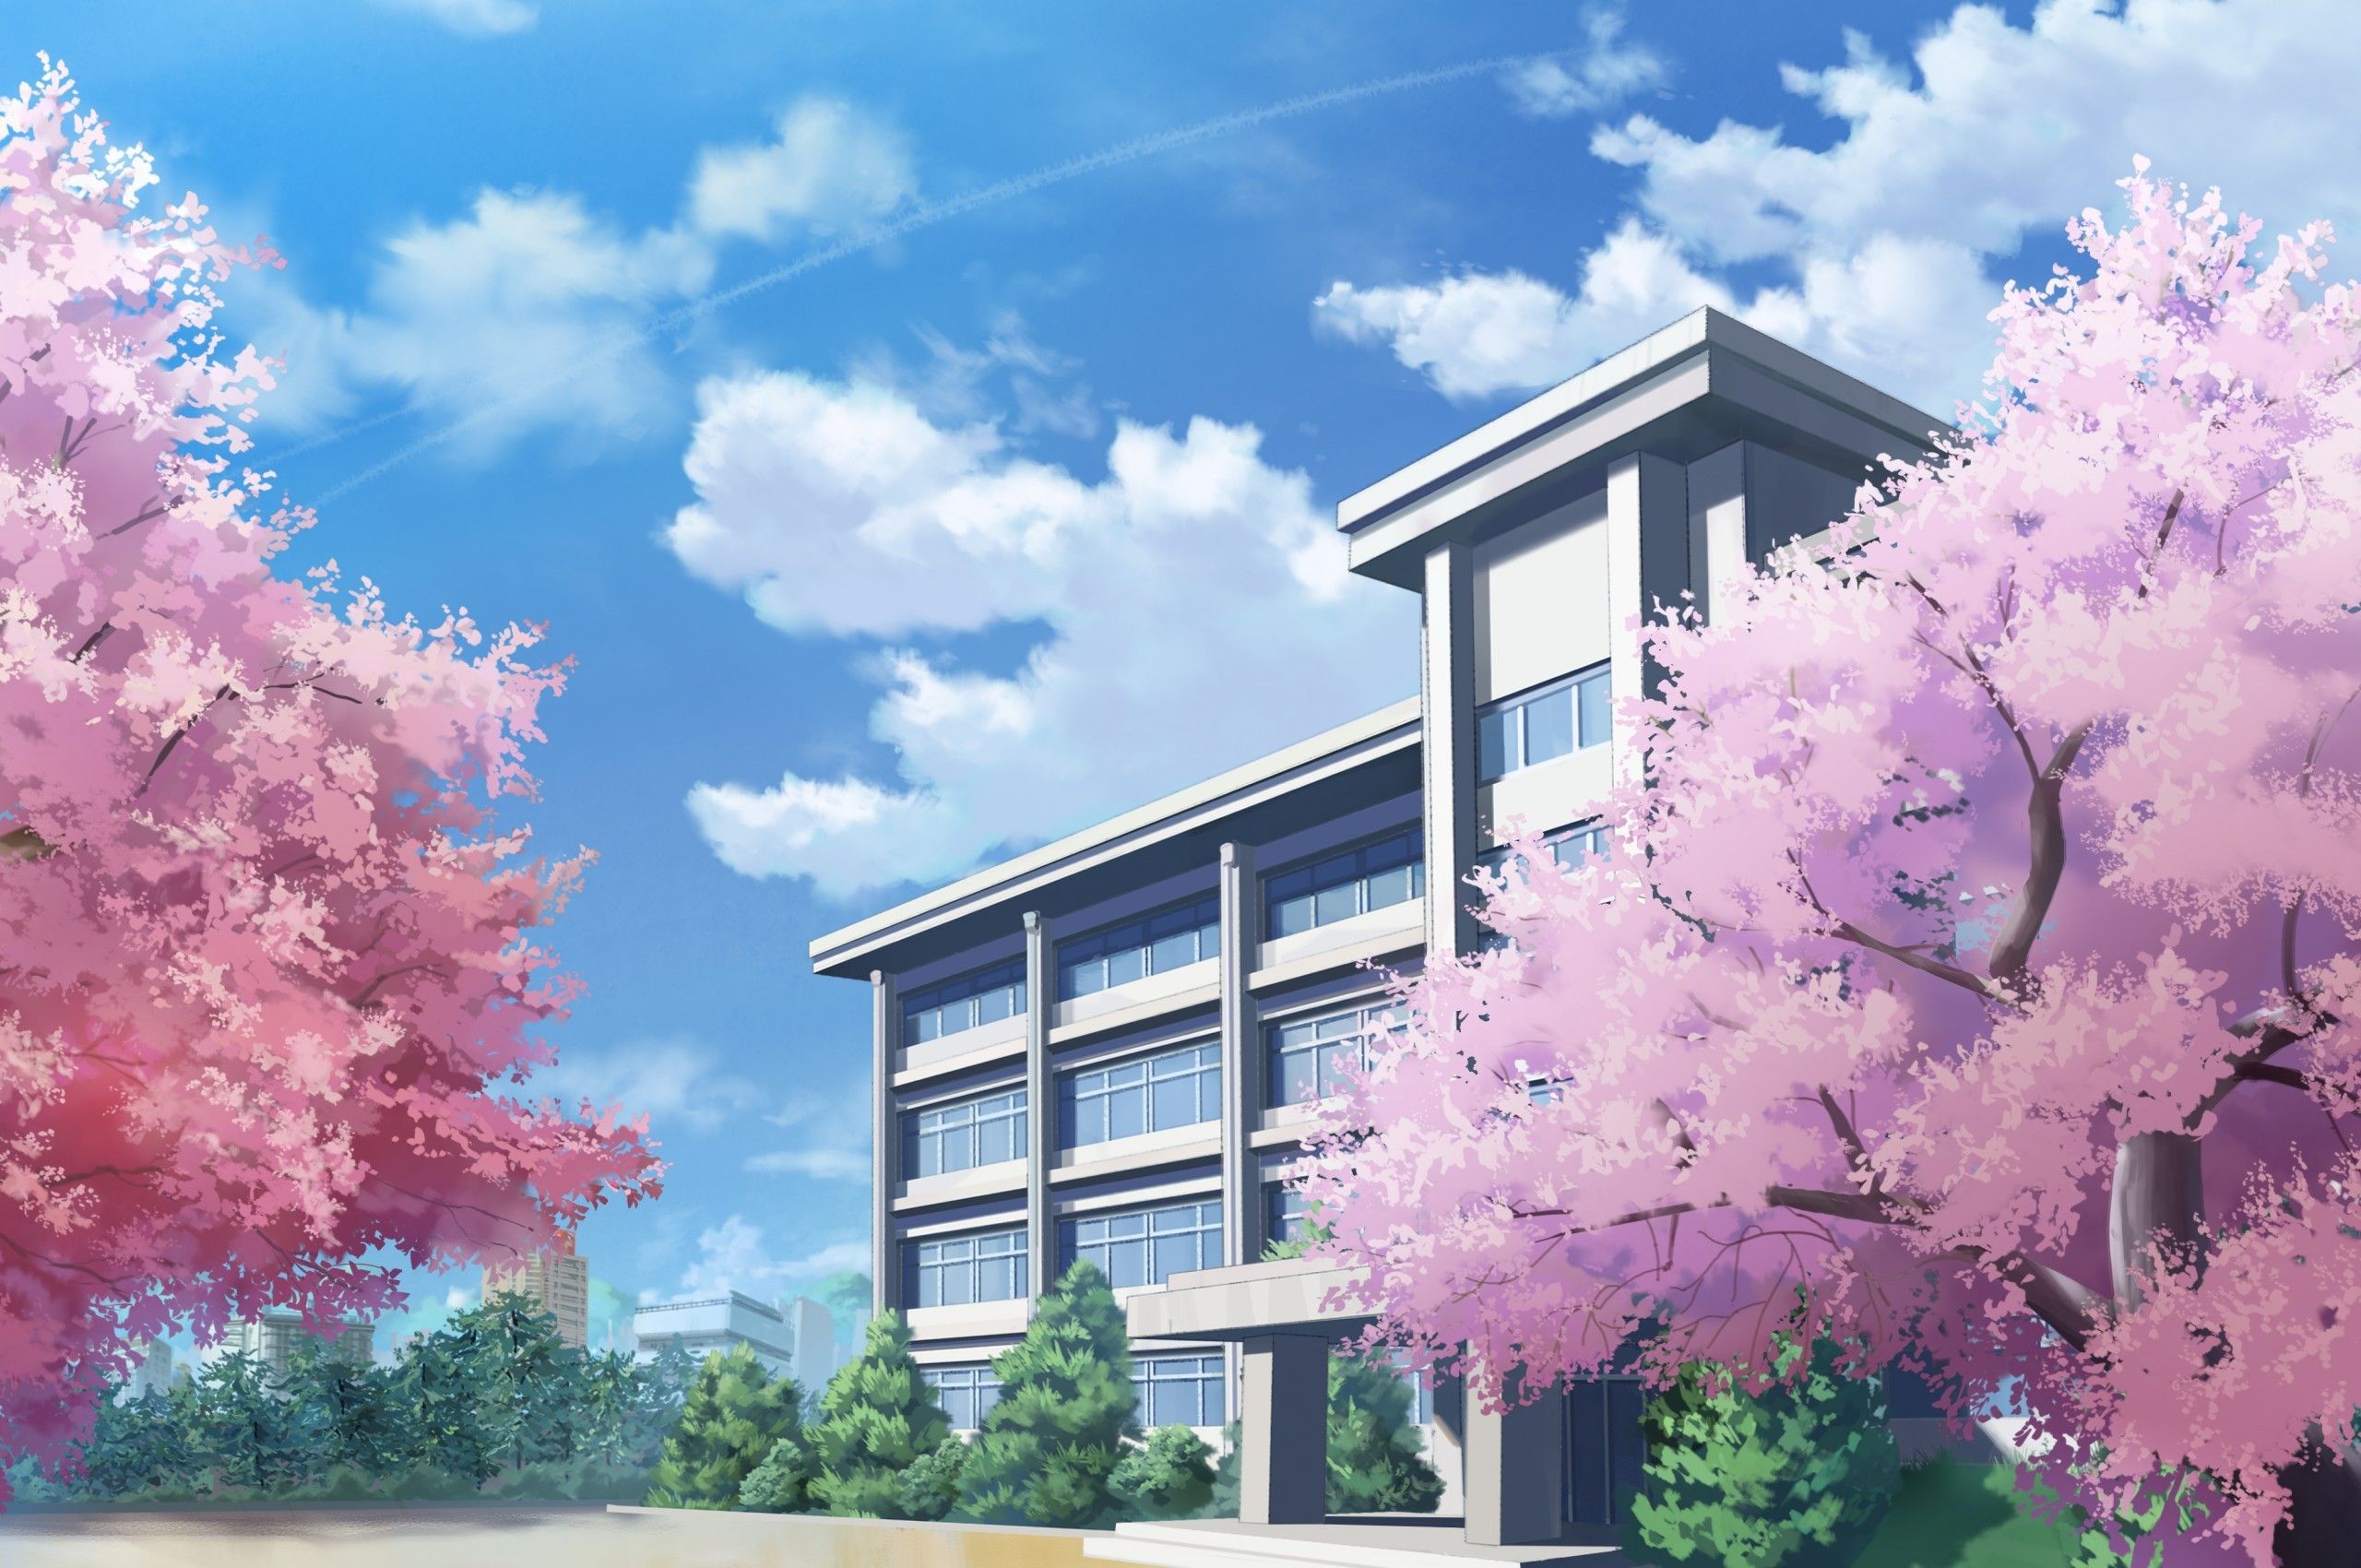 Download 2560x1700 Anime School, Building, Sakura Blossom, Clouds Wallpaper for Chromebook Pixel